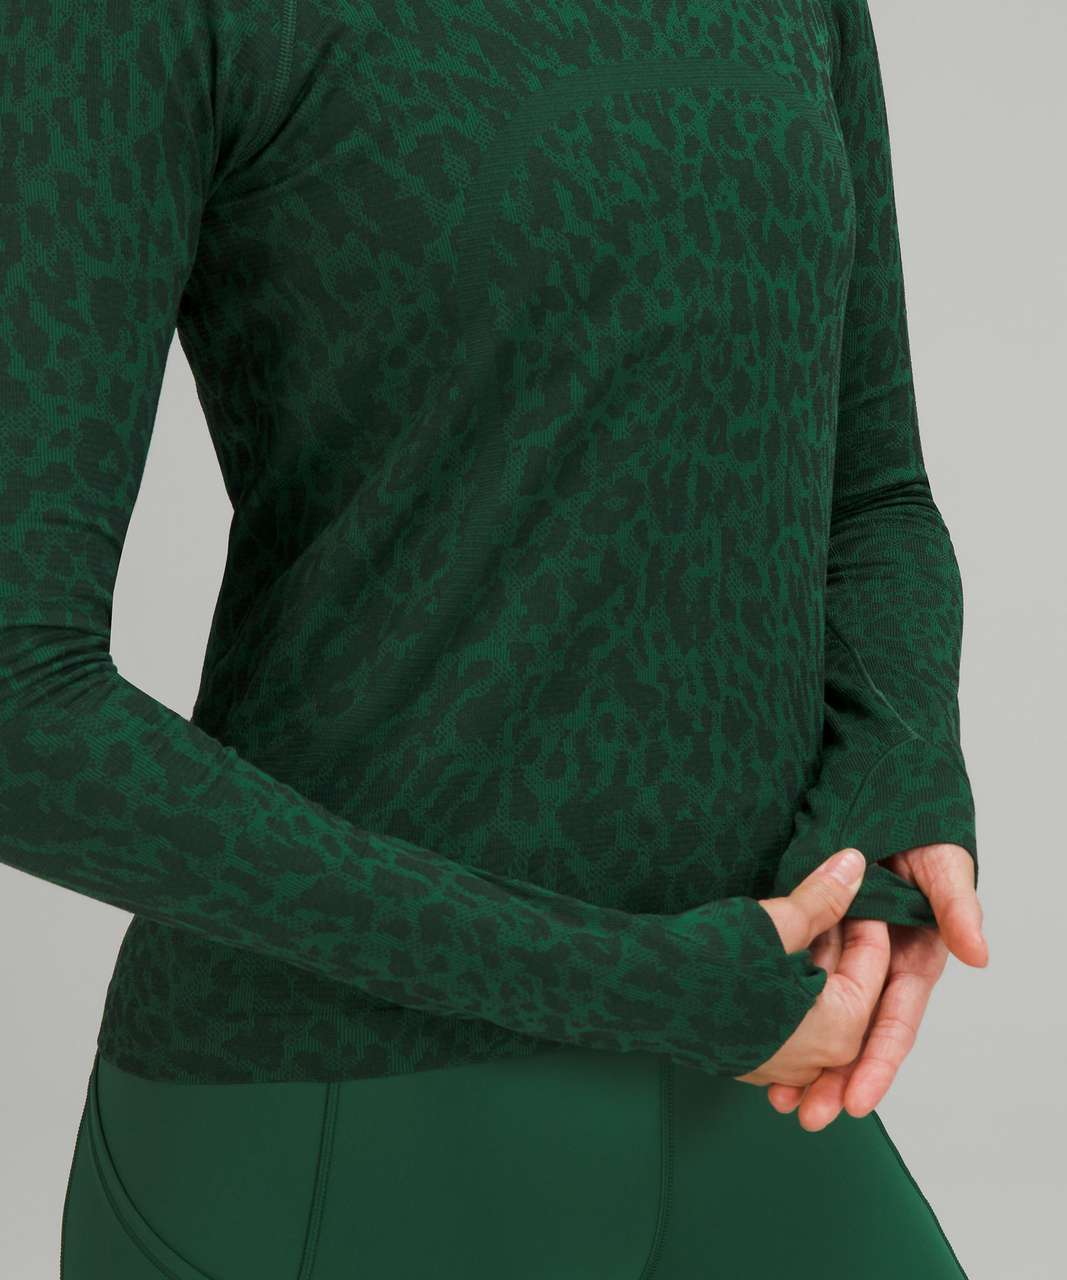 Lululemon Swiftly Tech Long Sleeve Shirt 2.0 *Race Length - Particolour Everglade Green / Black